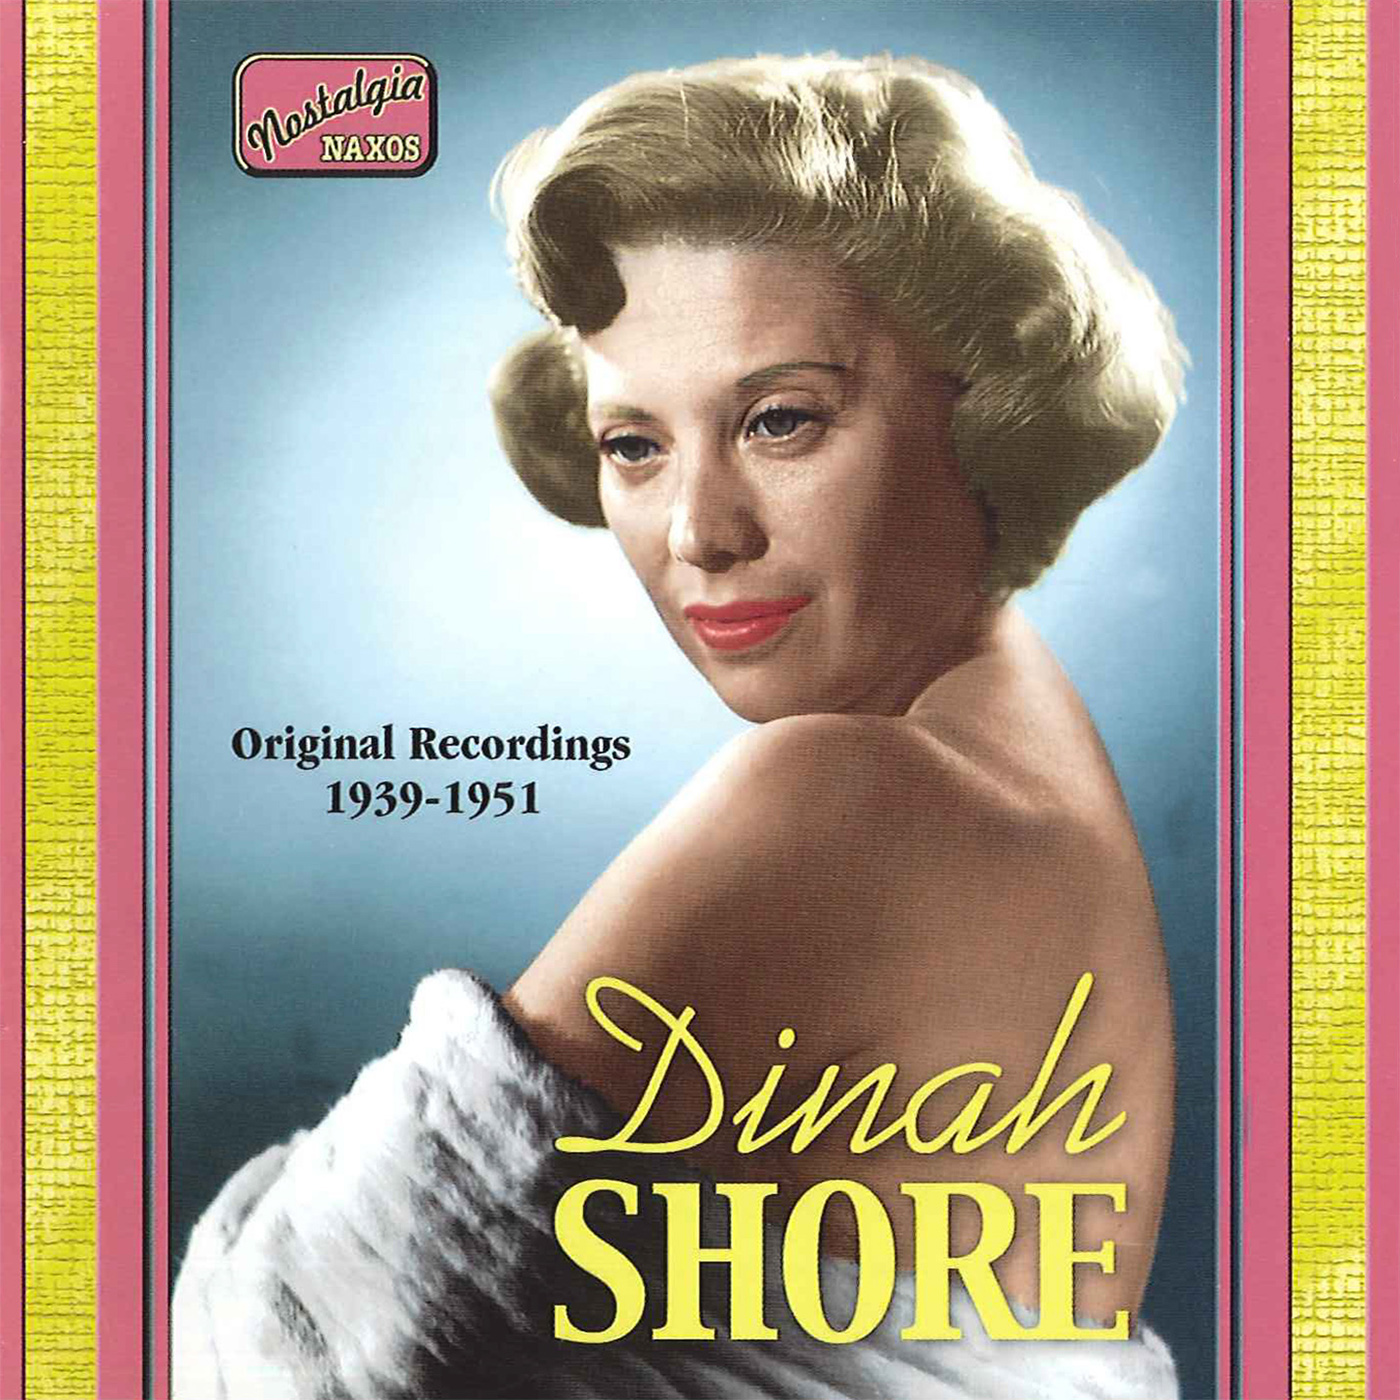 SHORE, Dinah: Dinah Shore (1939-1951)